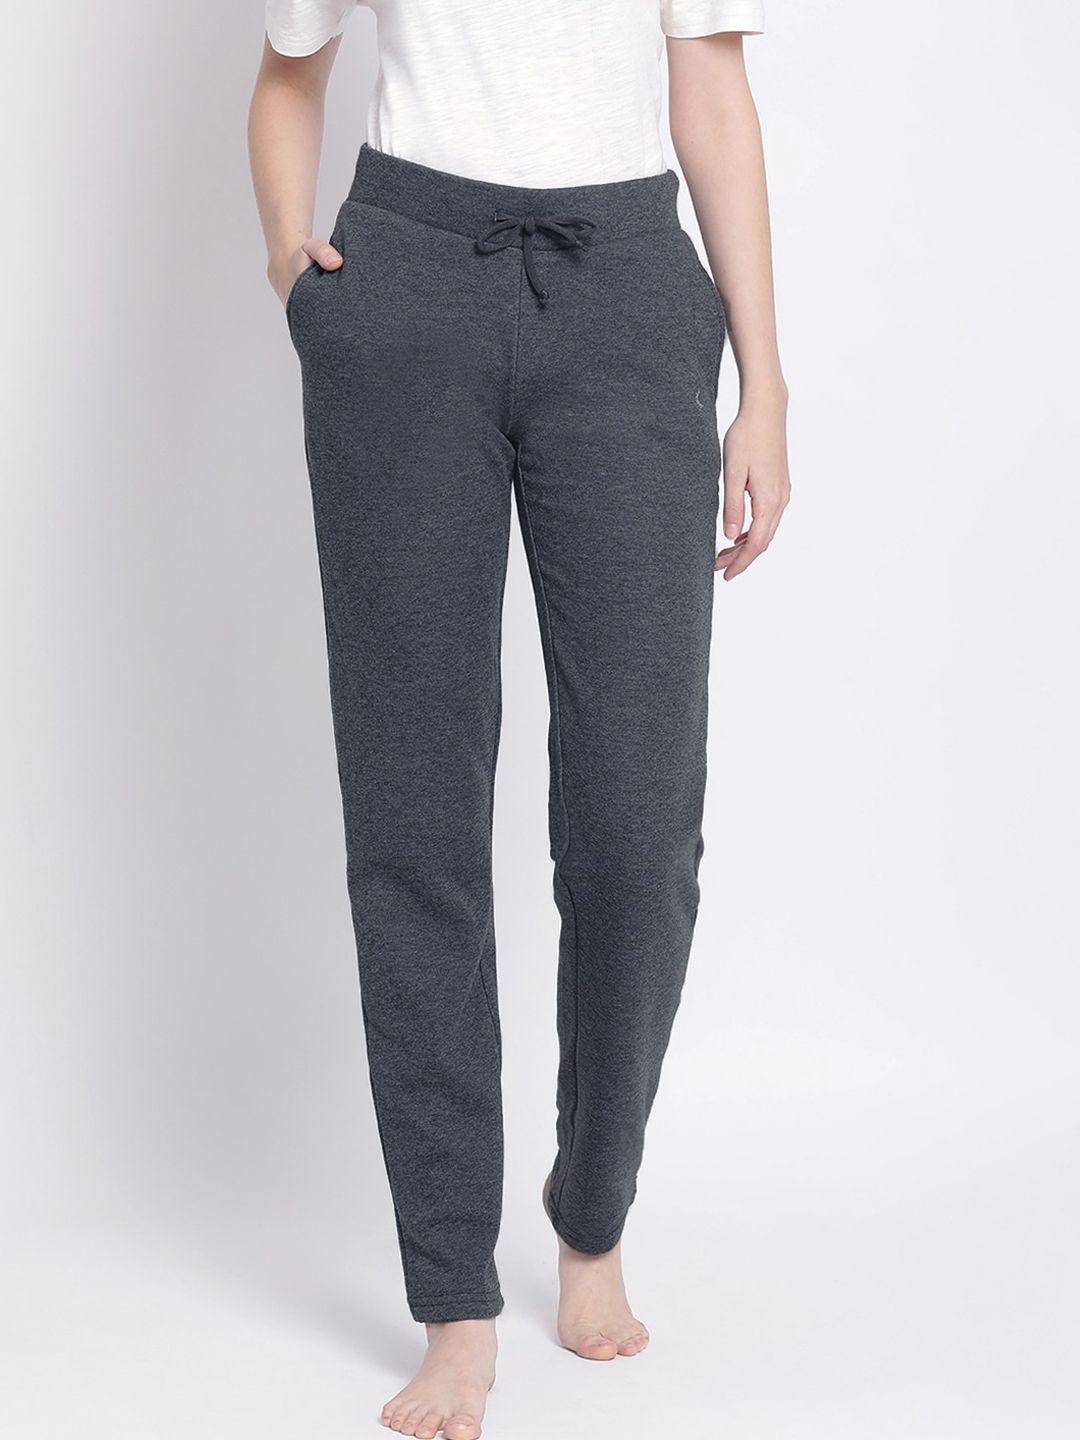 kanvin women charcoal grey solid cotton lounge pants